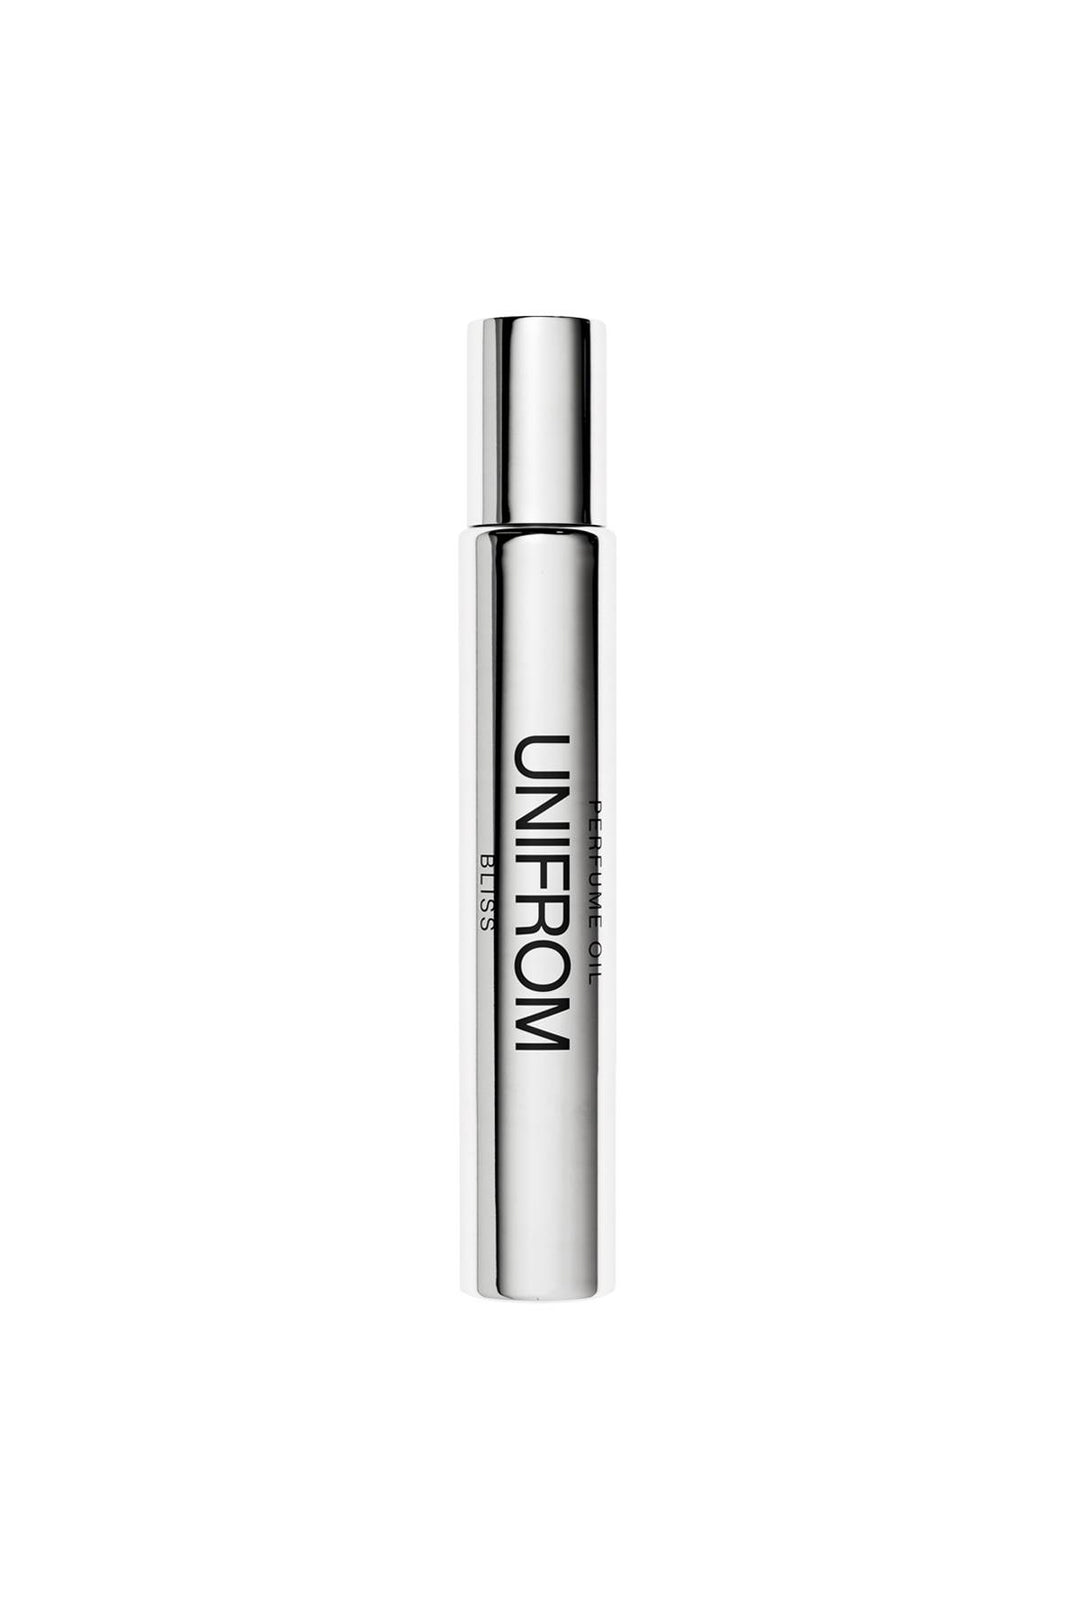 Unifrom perfume oil bliss - 10ml-0